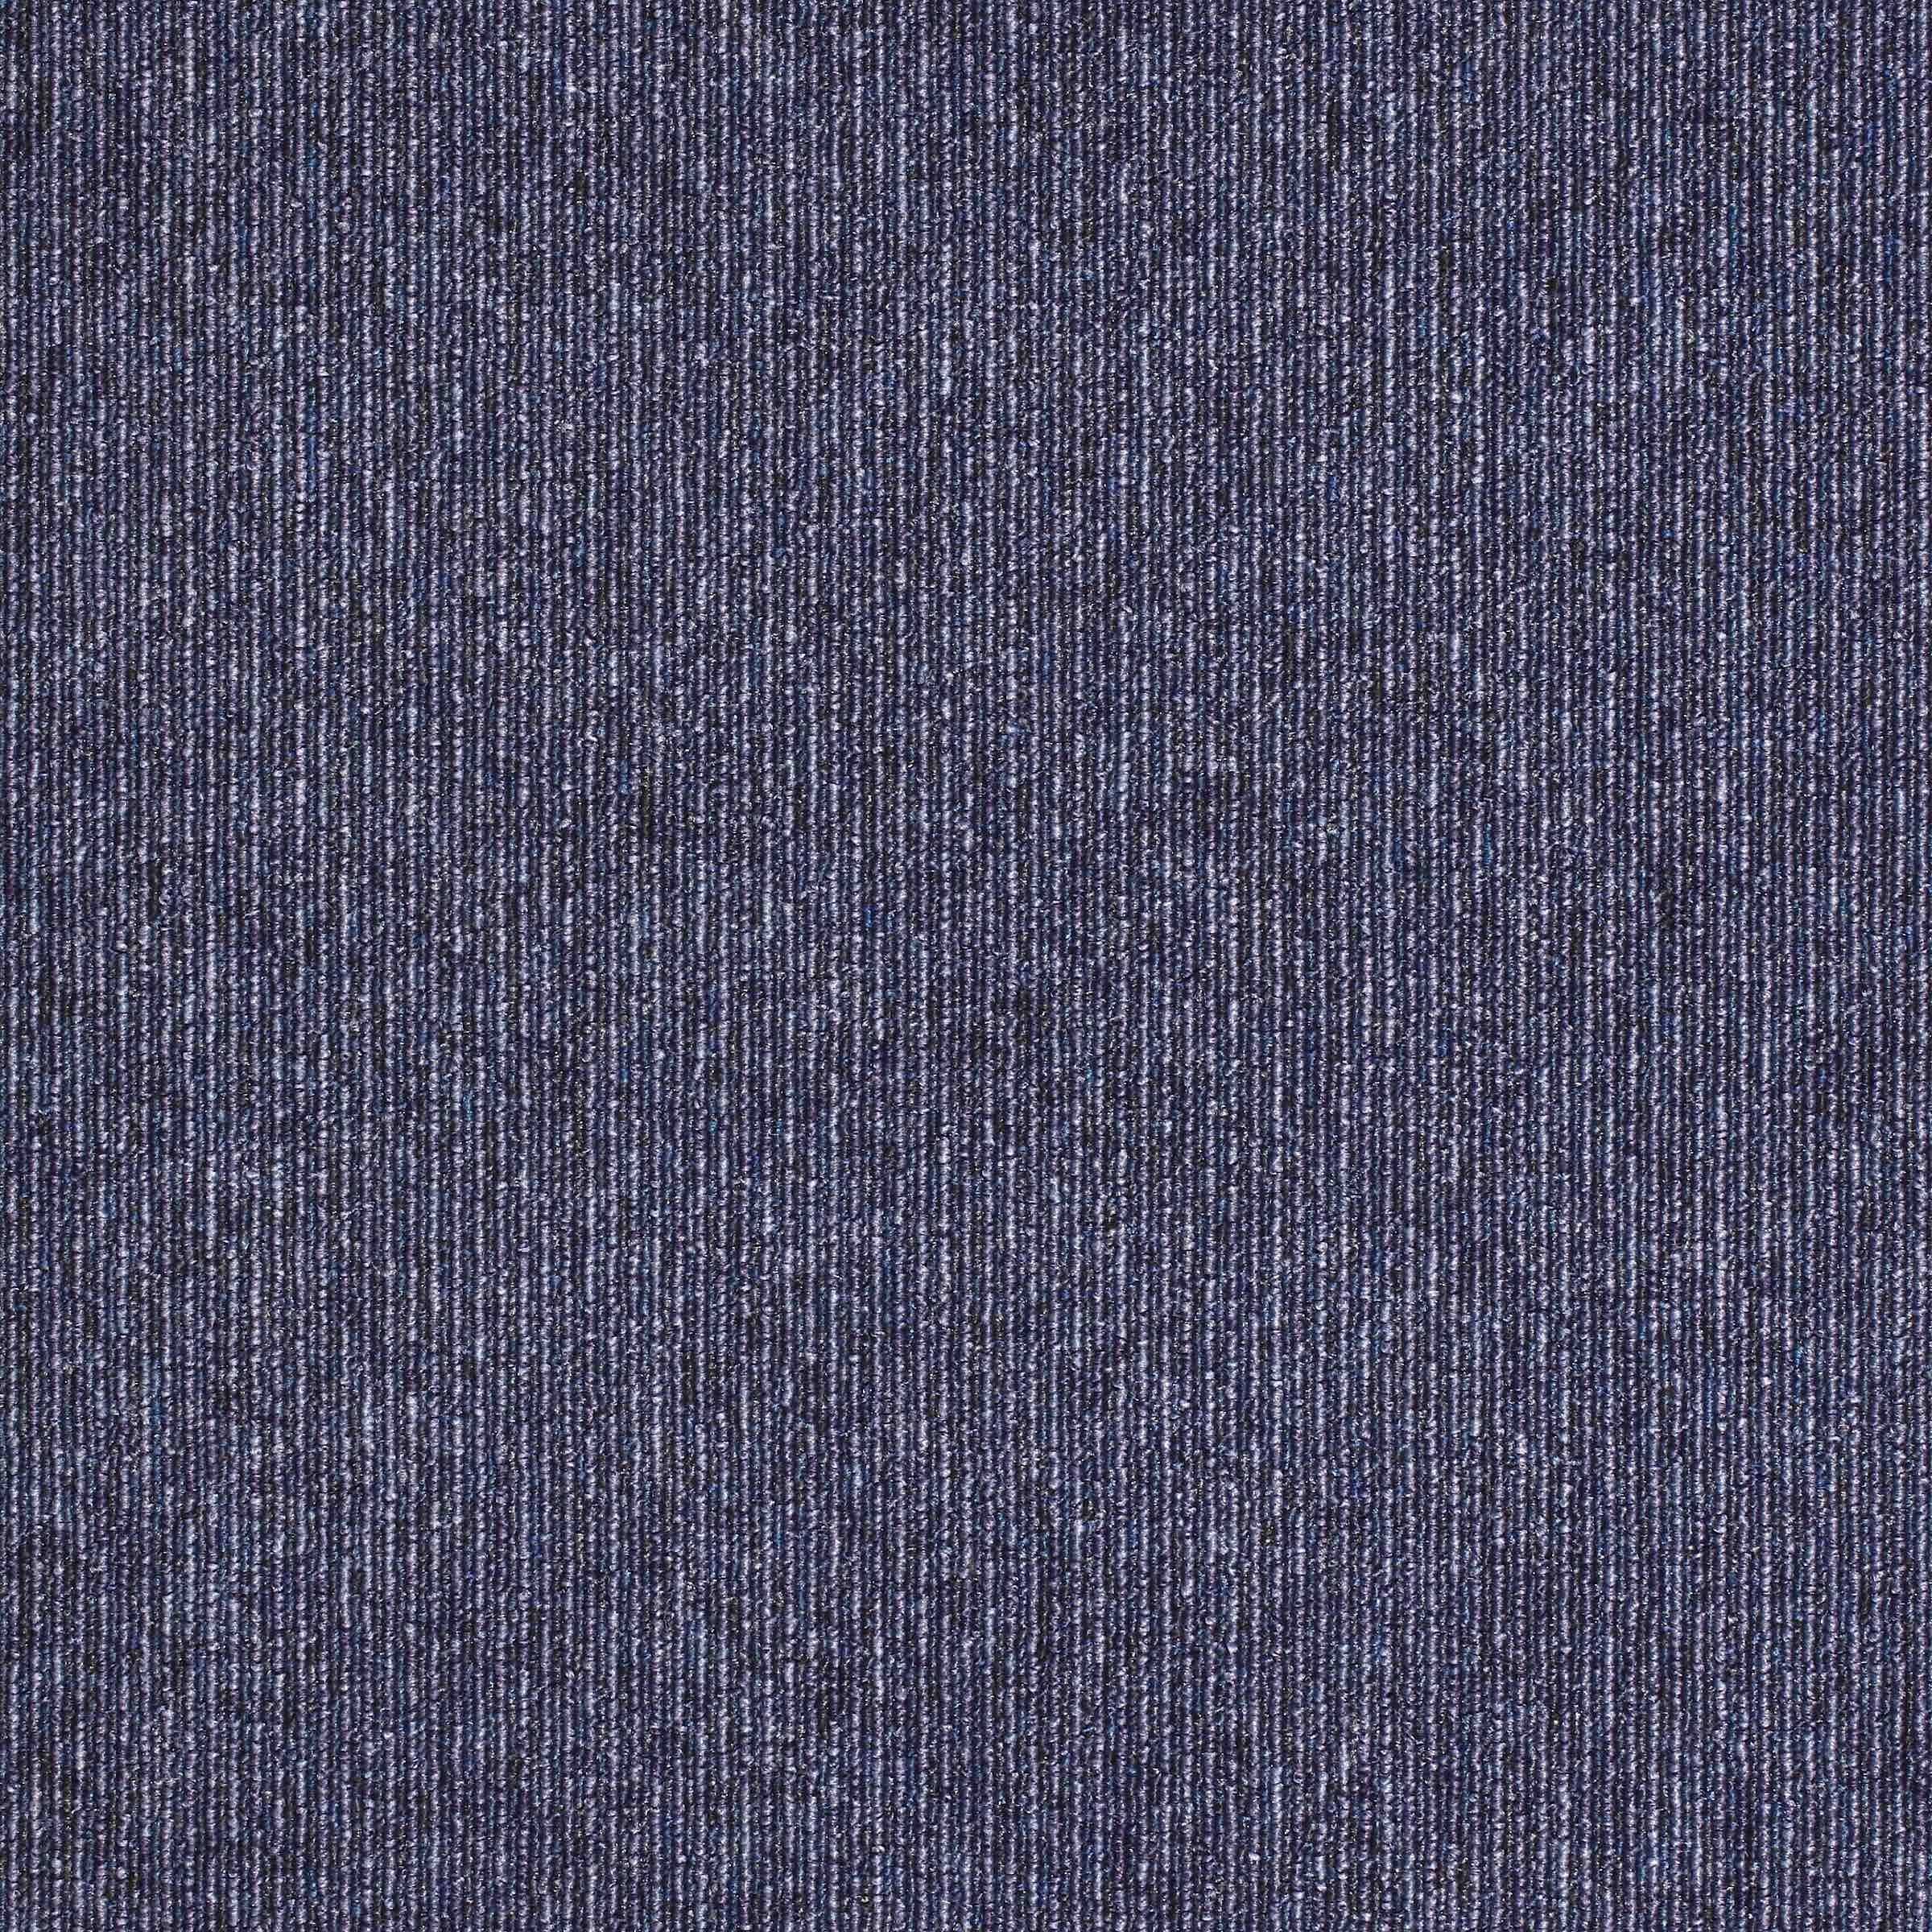 Paragon Sirocco Stripe Carpet Tile Blue Candy